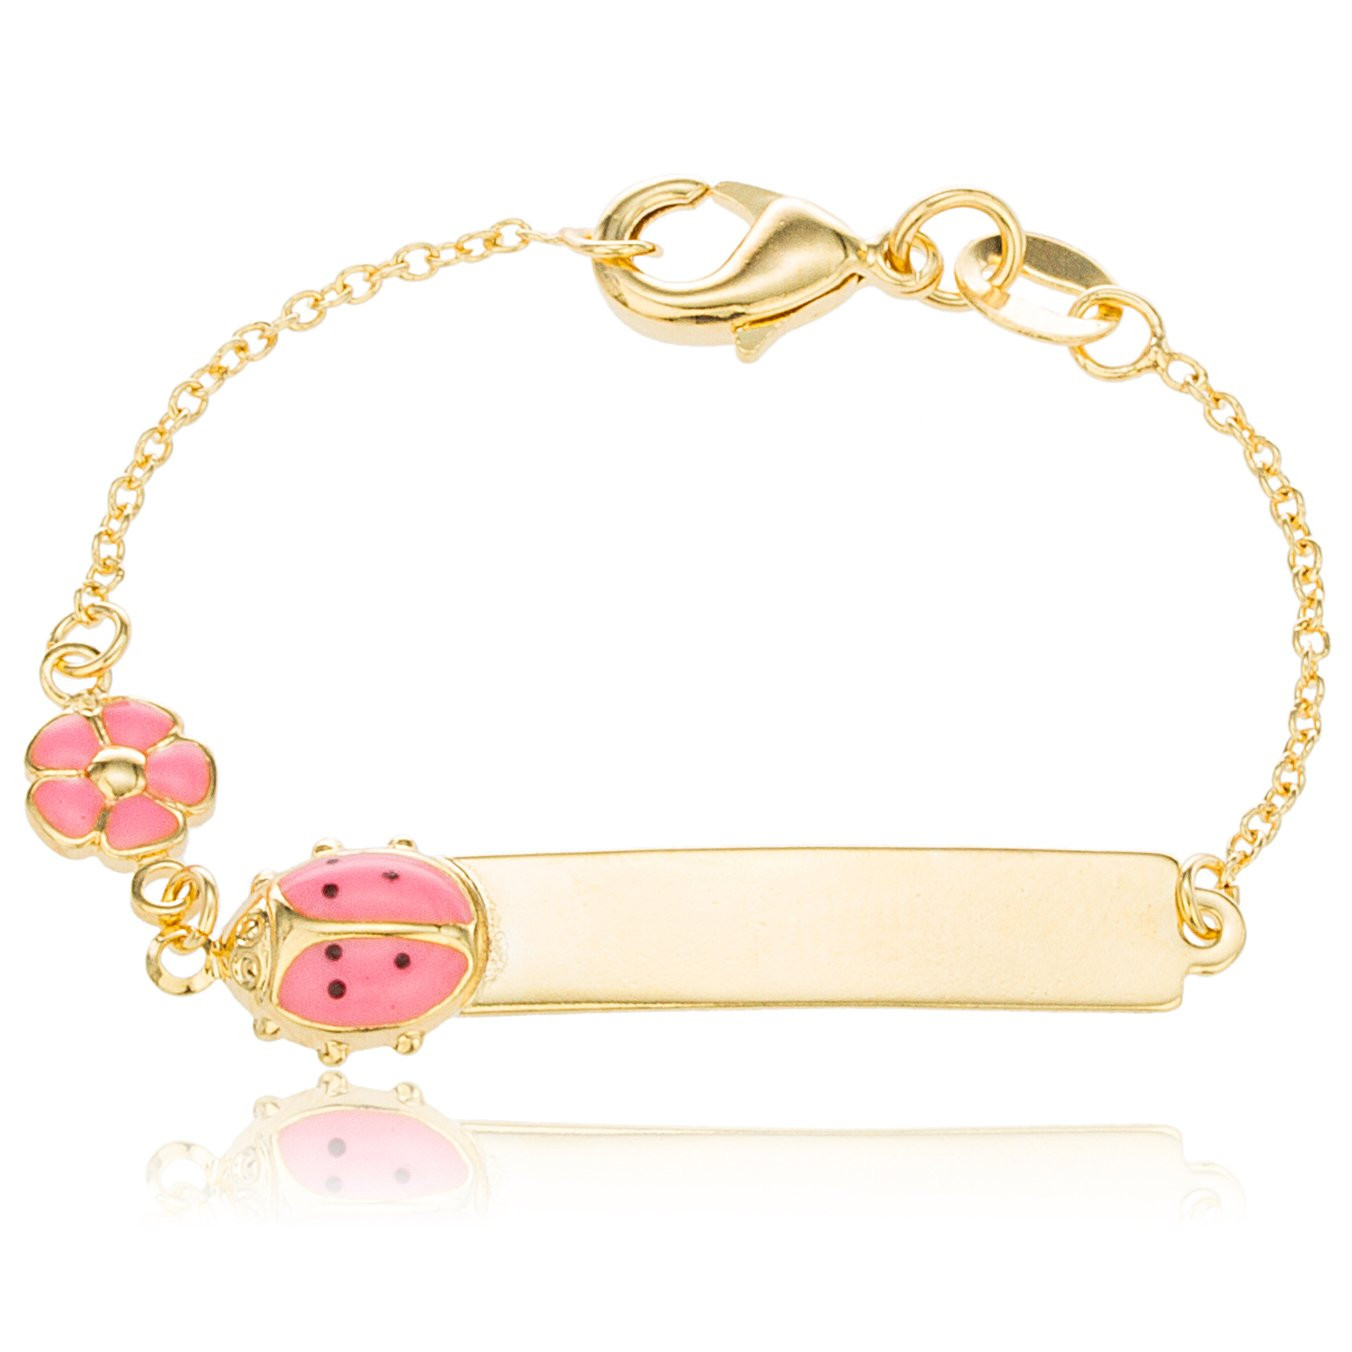 Gold Bracelets For Babies
 Baby Gold Bracelet Amazon